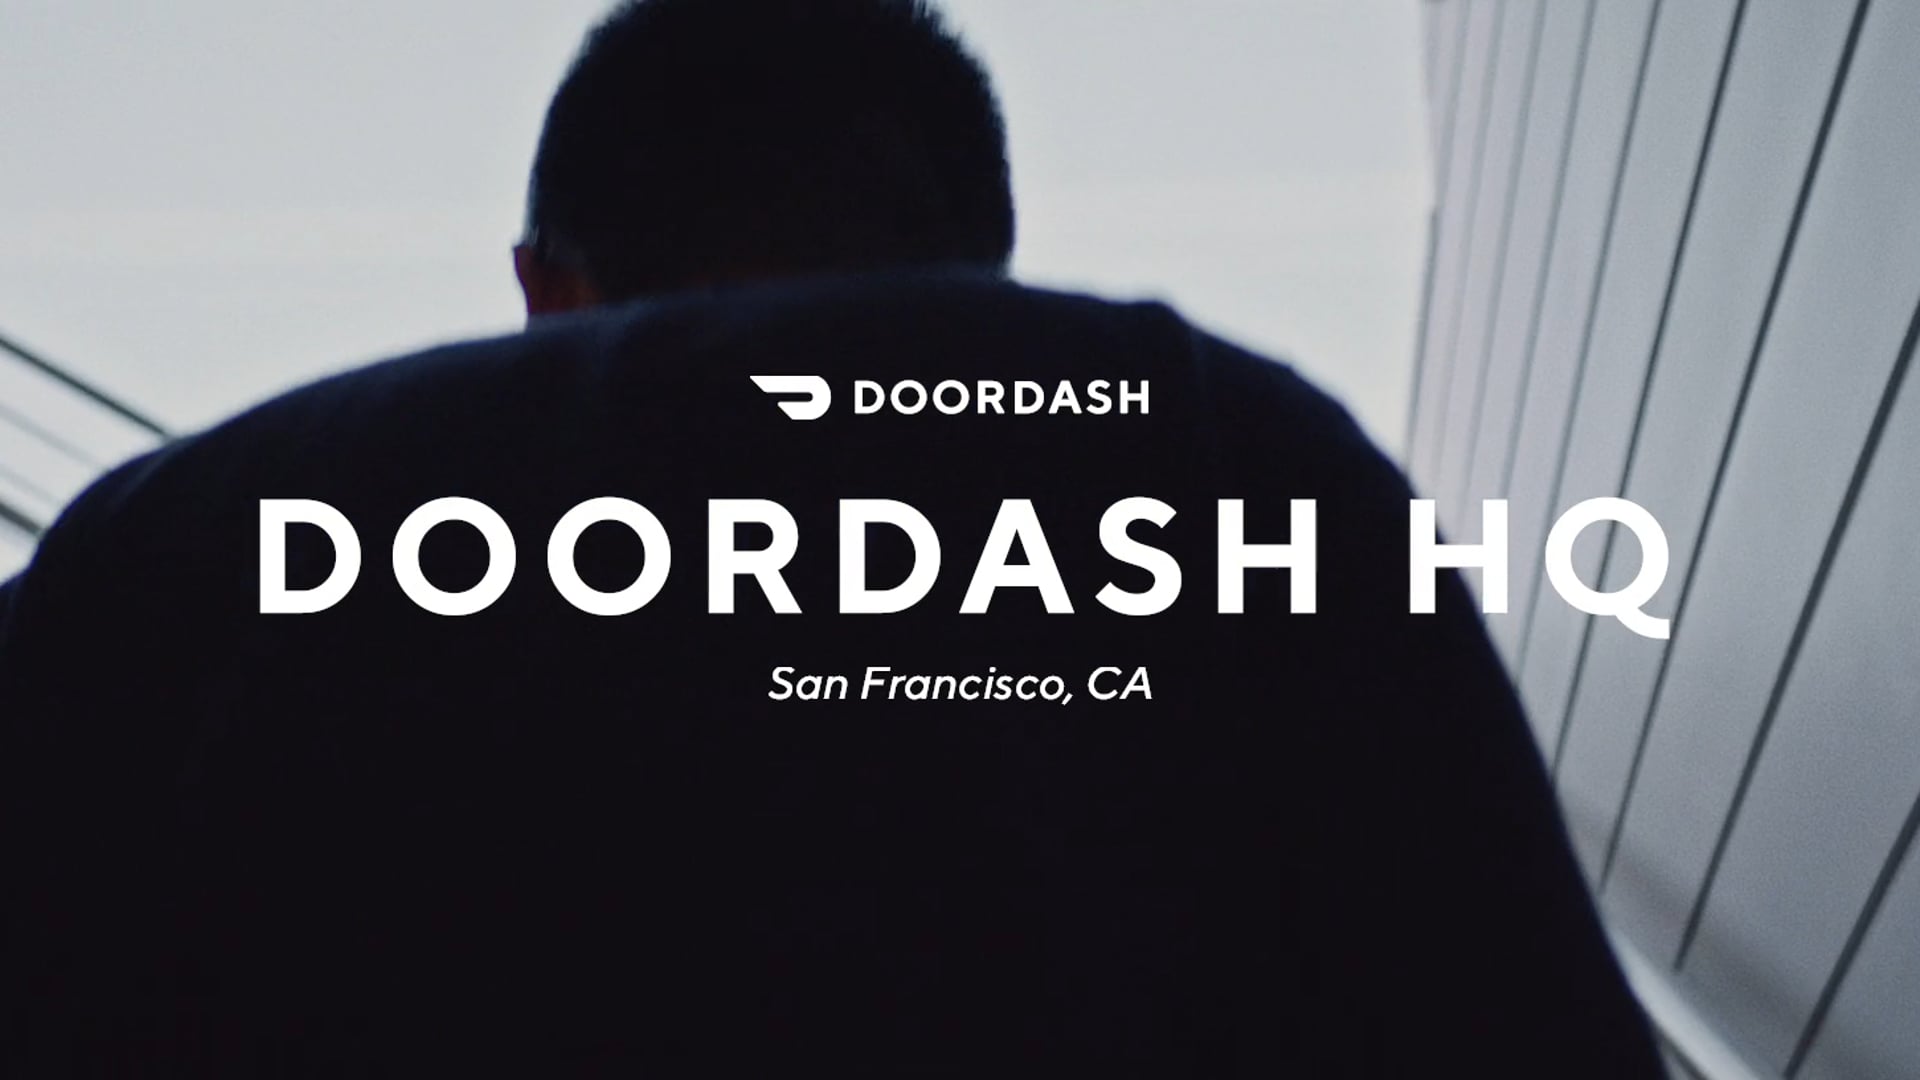 DoorDash Kitchens Without Borders | DoorDash HQ